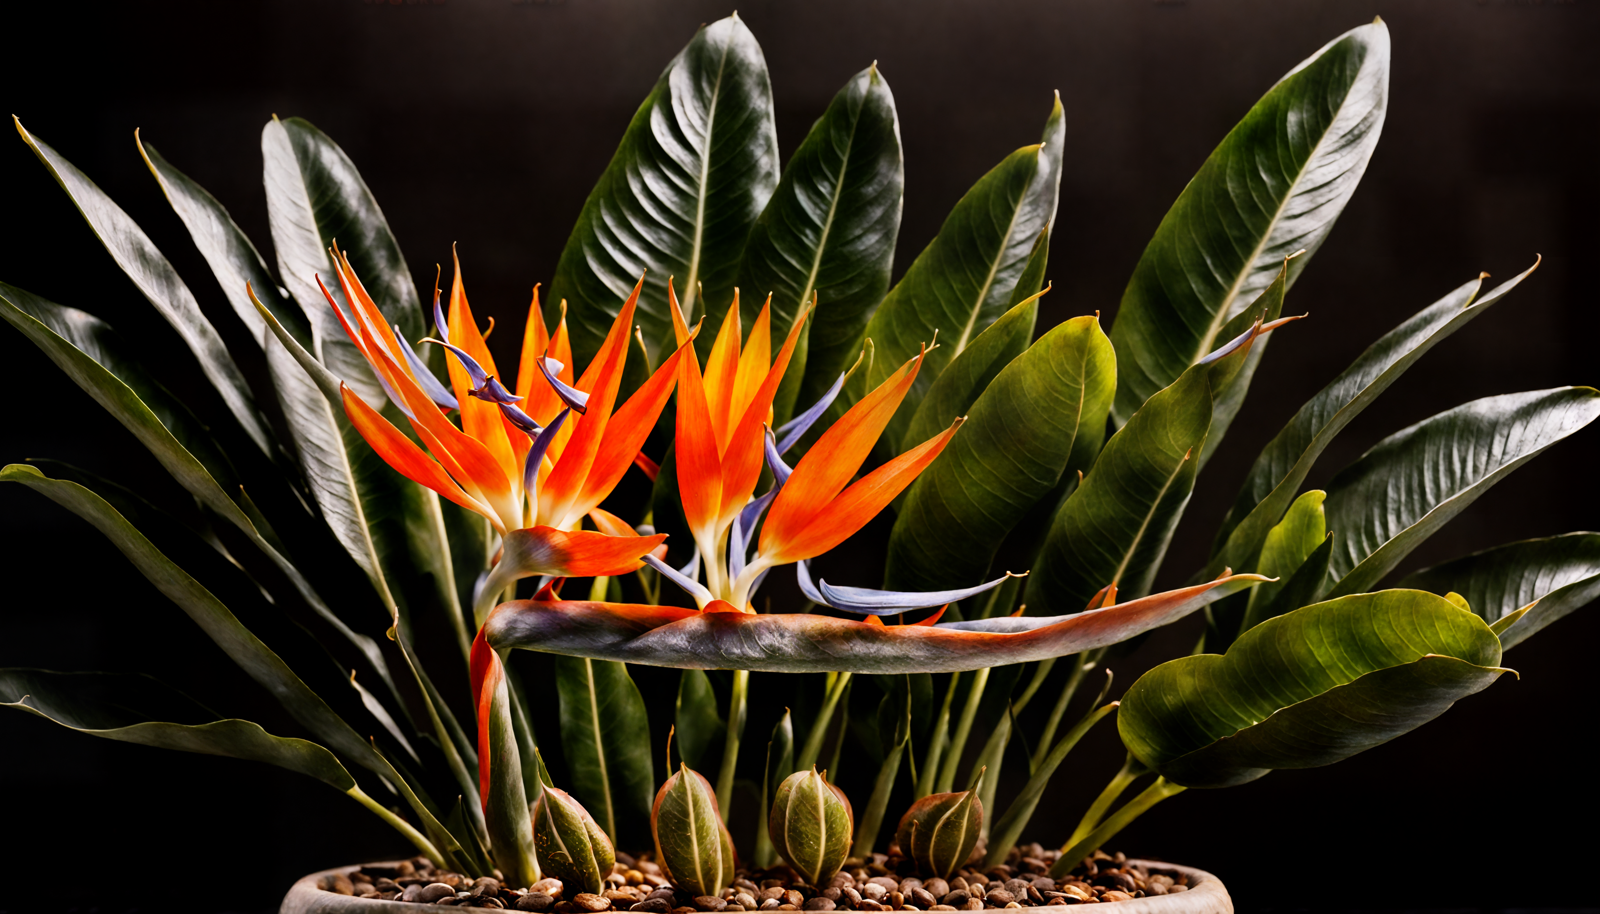 Strelitzia reginae, or Bird of Paradise, with vibrant orange flowers and green leaves, indoor setting.